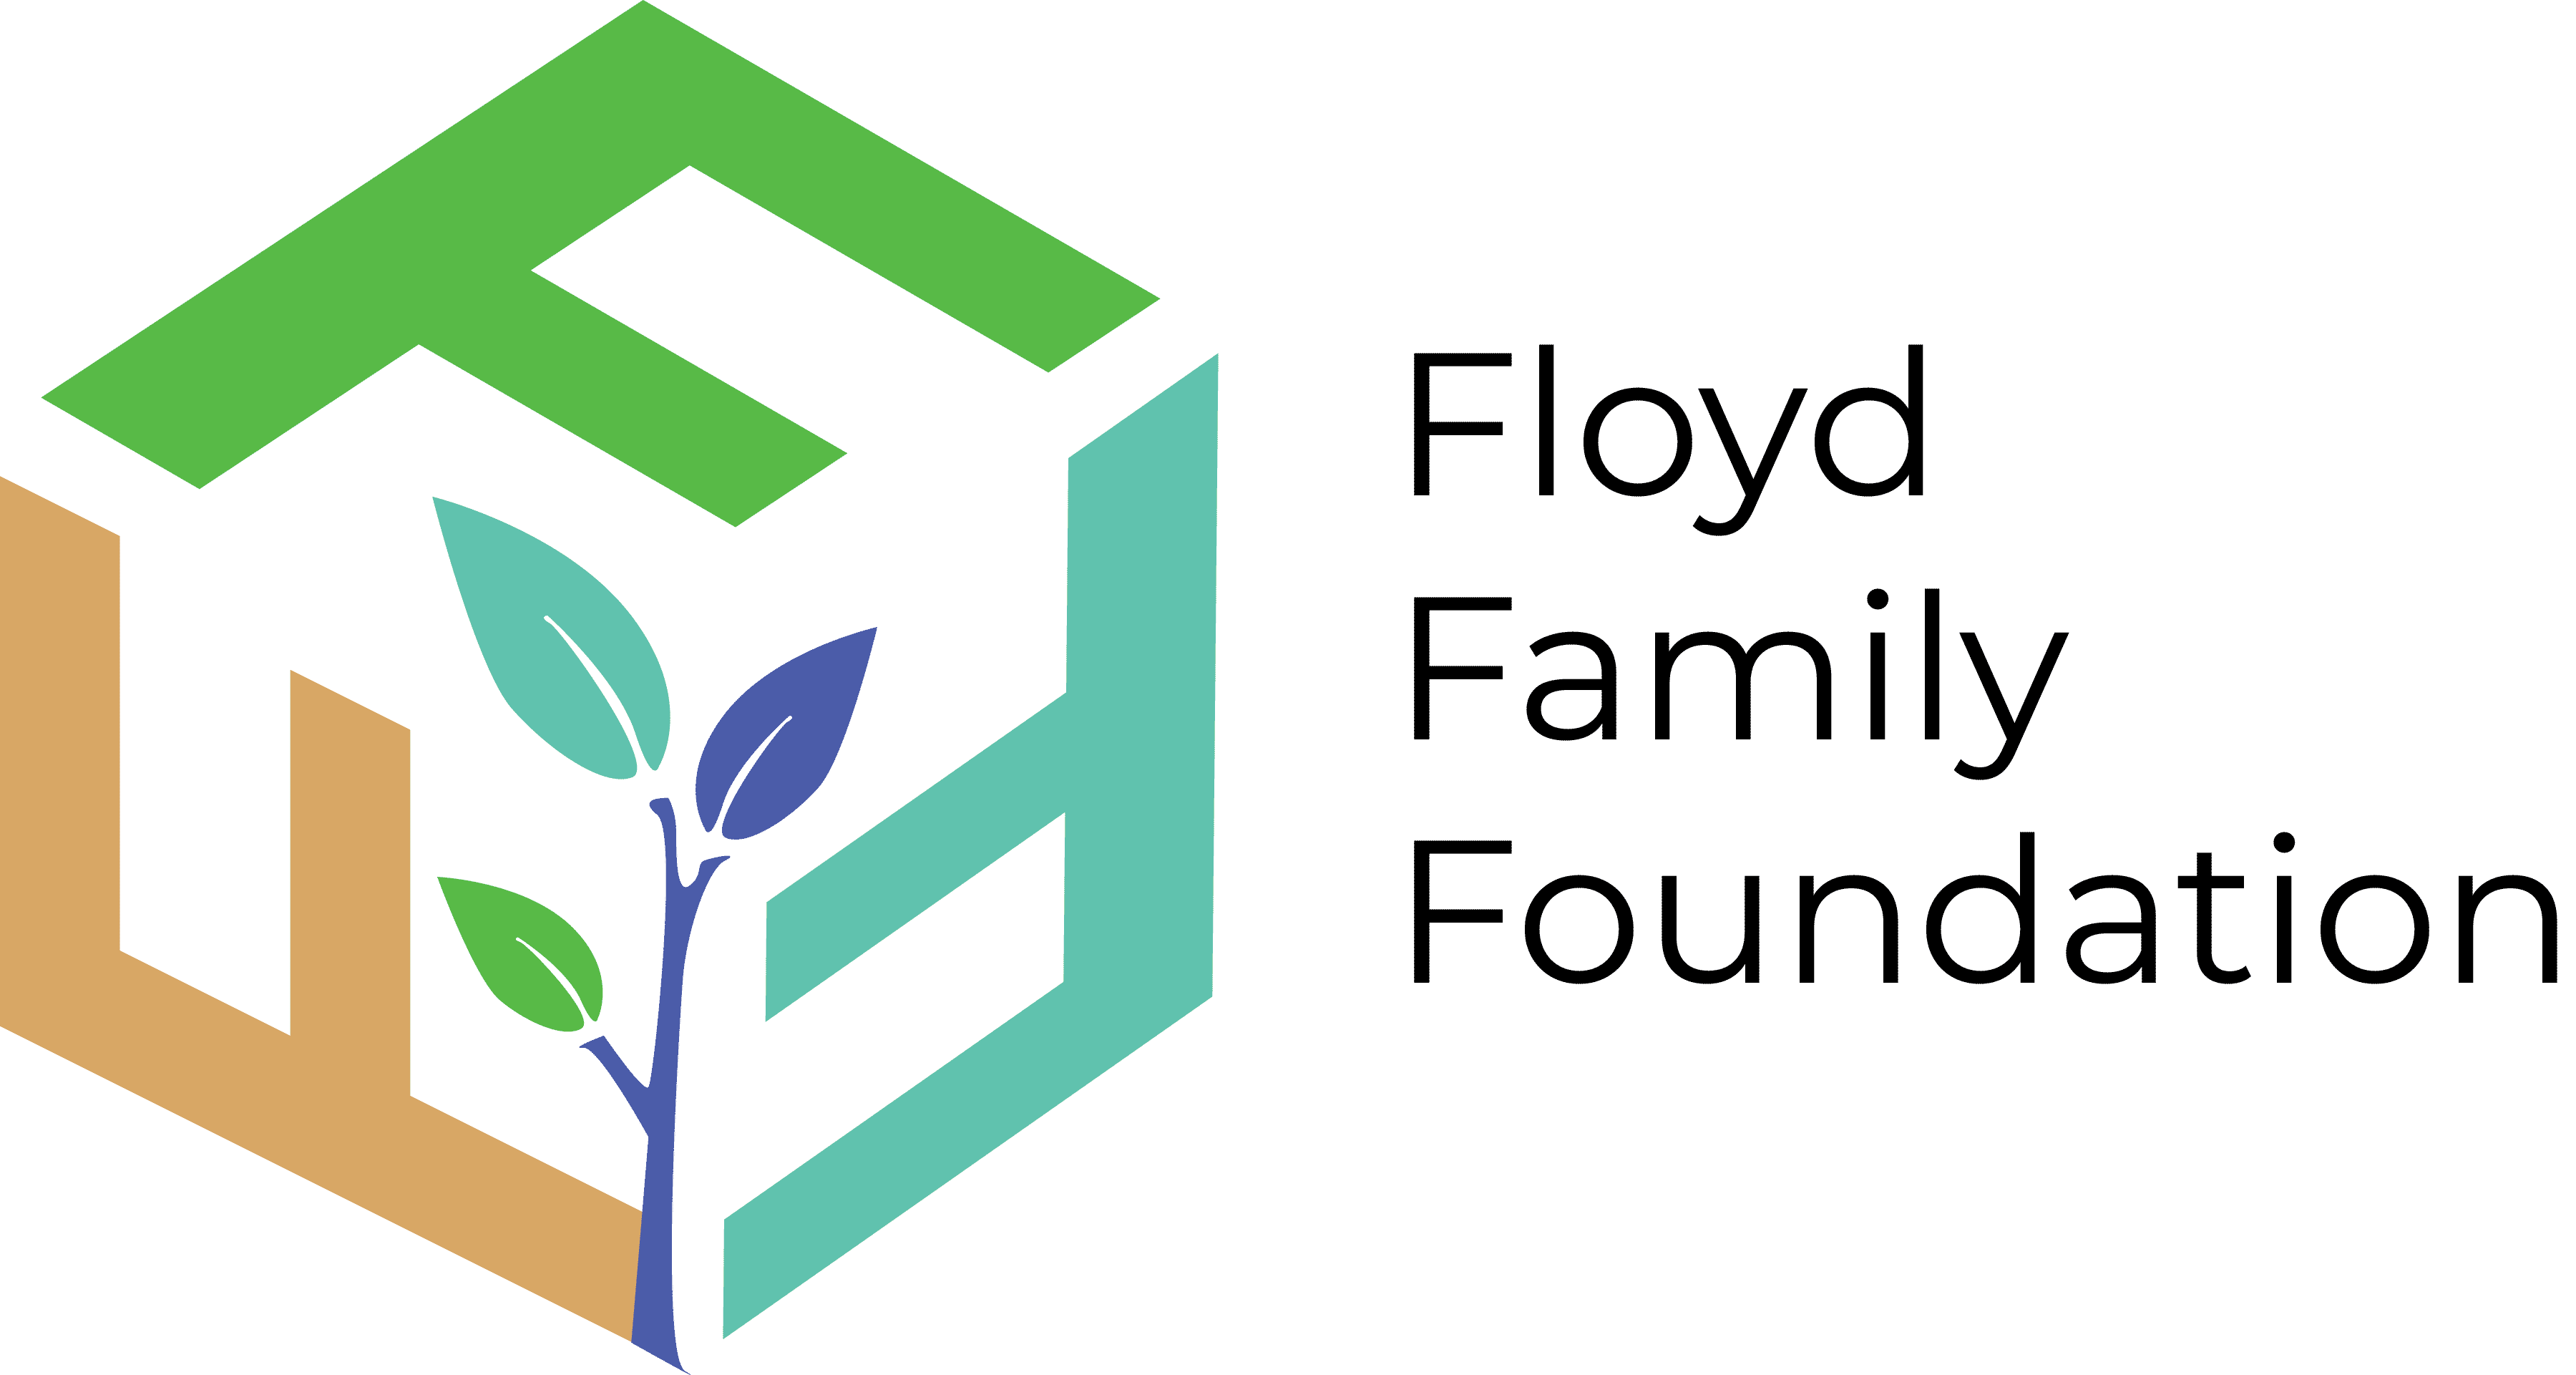 Floyd Family Foundation - Website Design by Discotoast